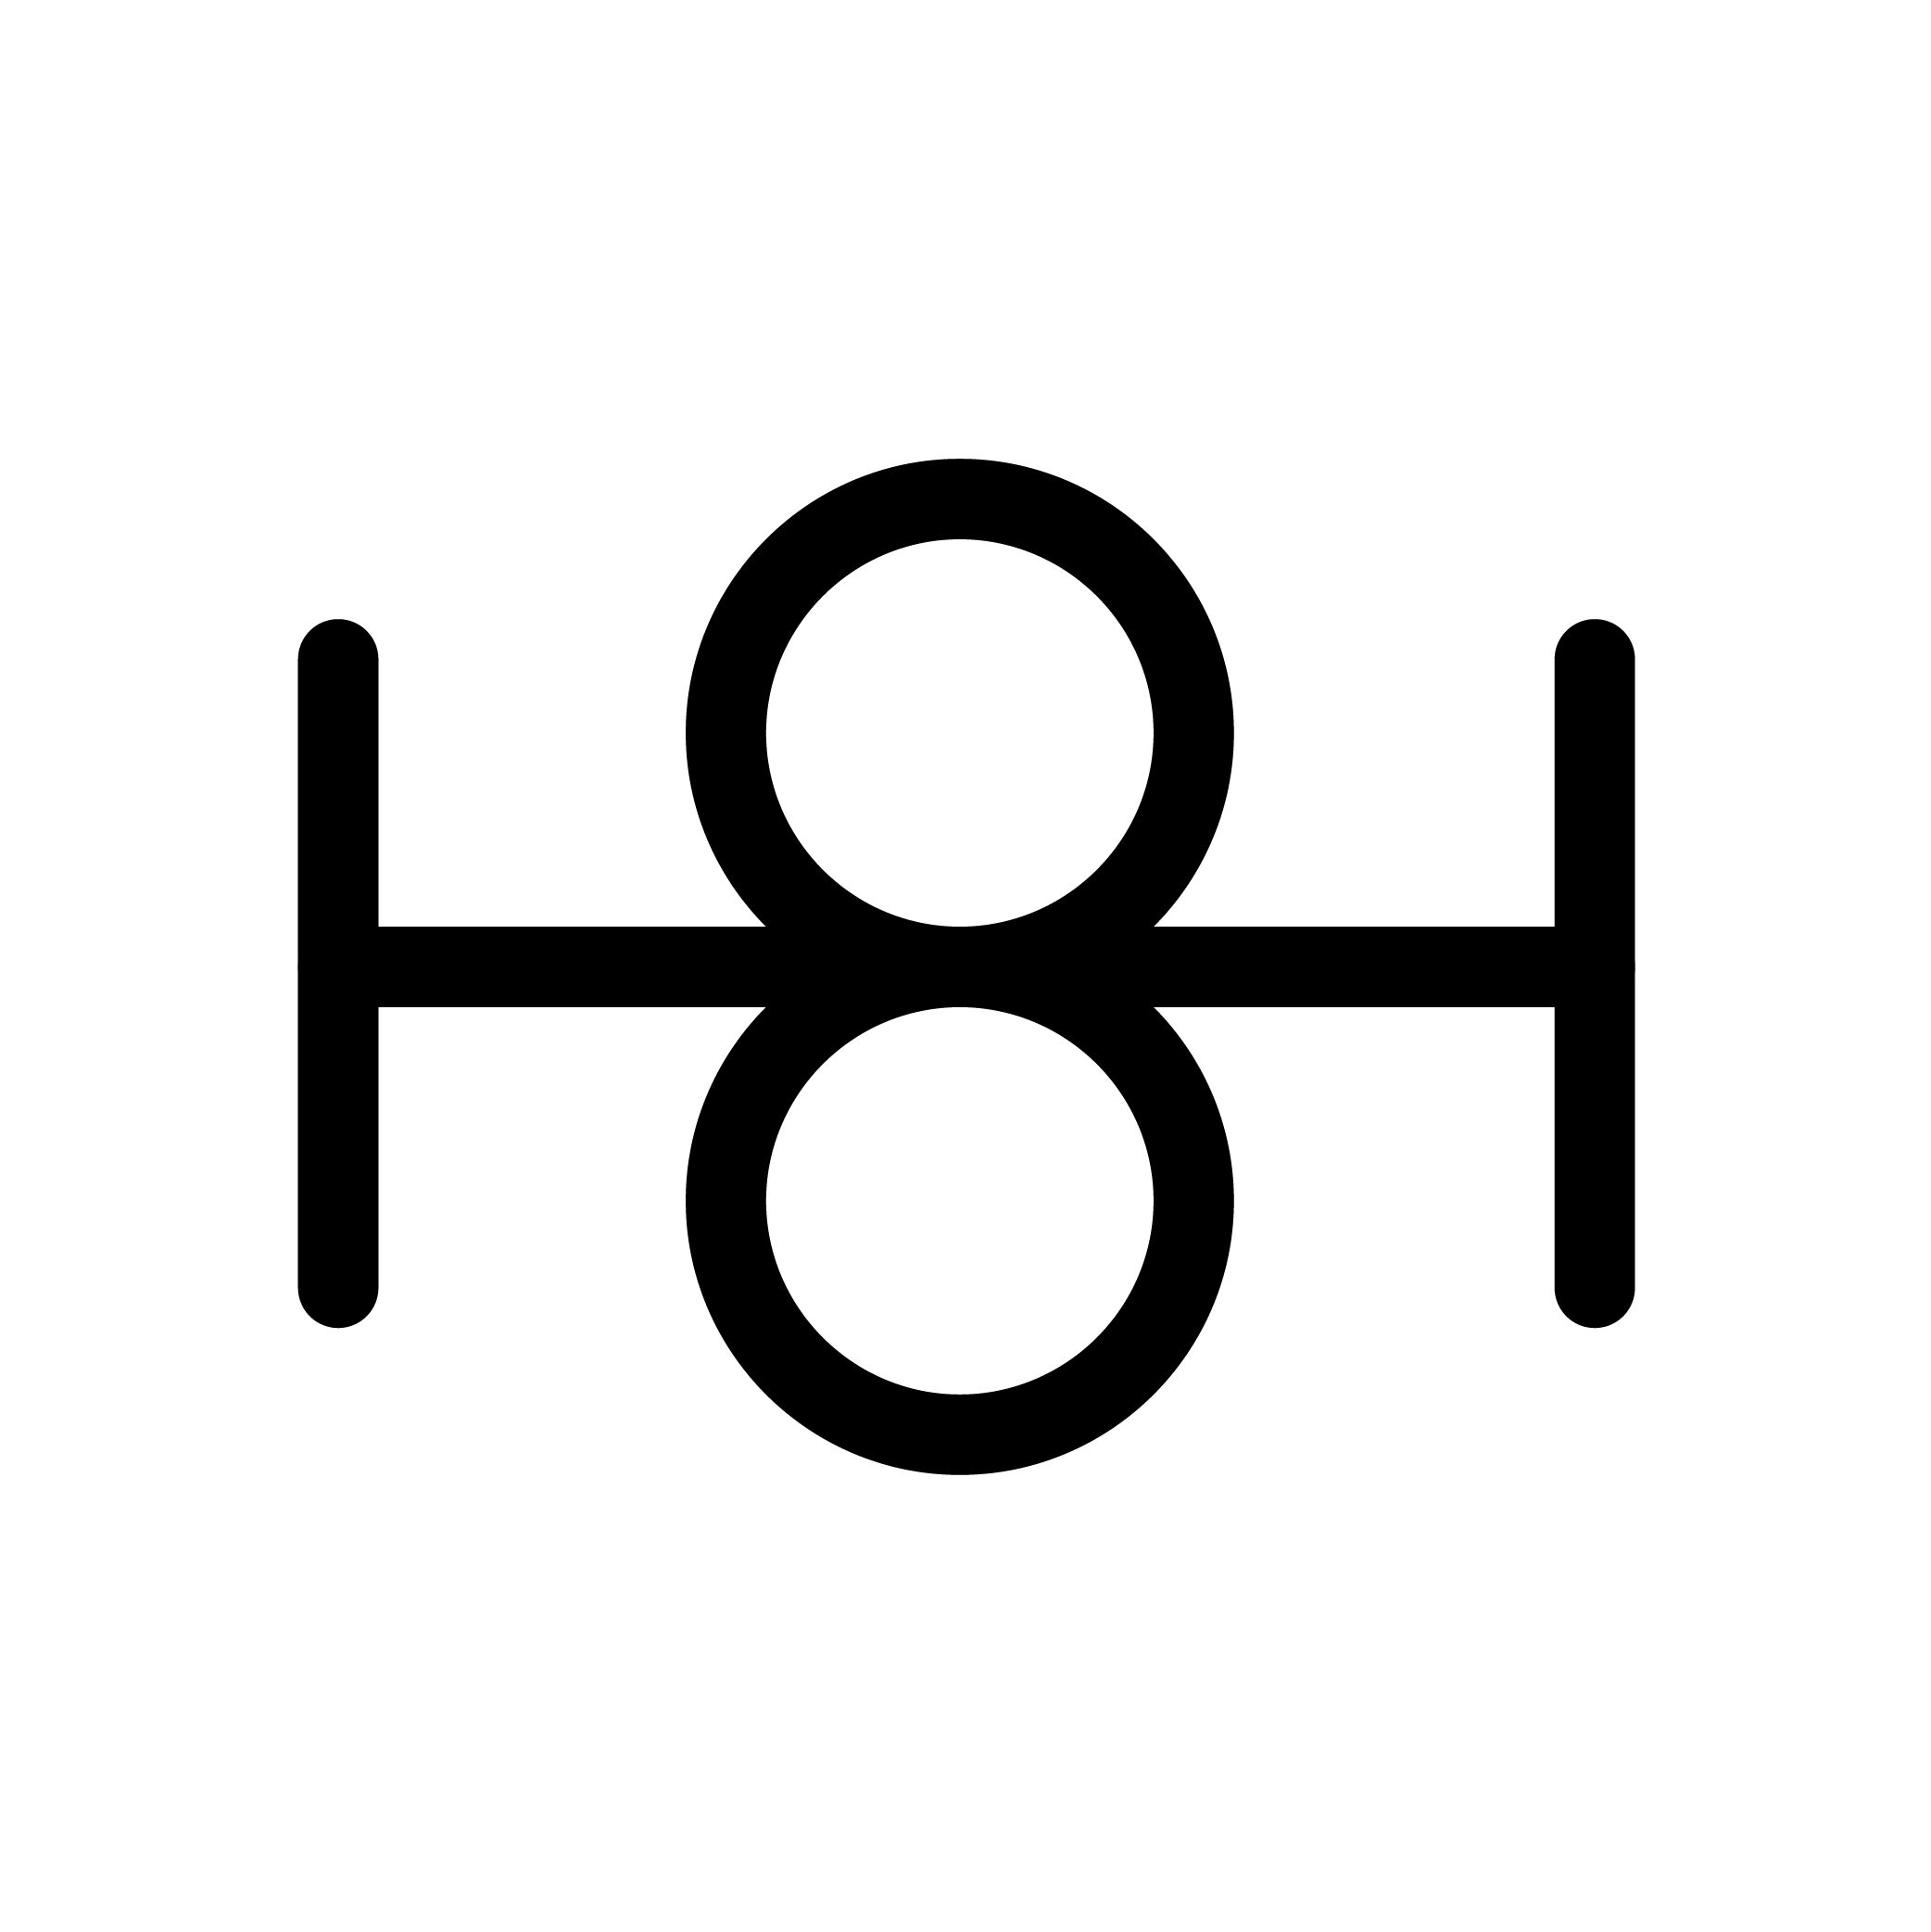 coriolis flow meter pandid symbol